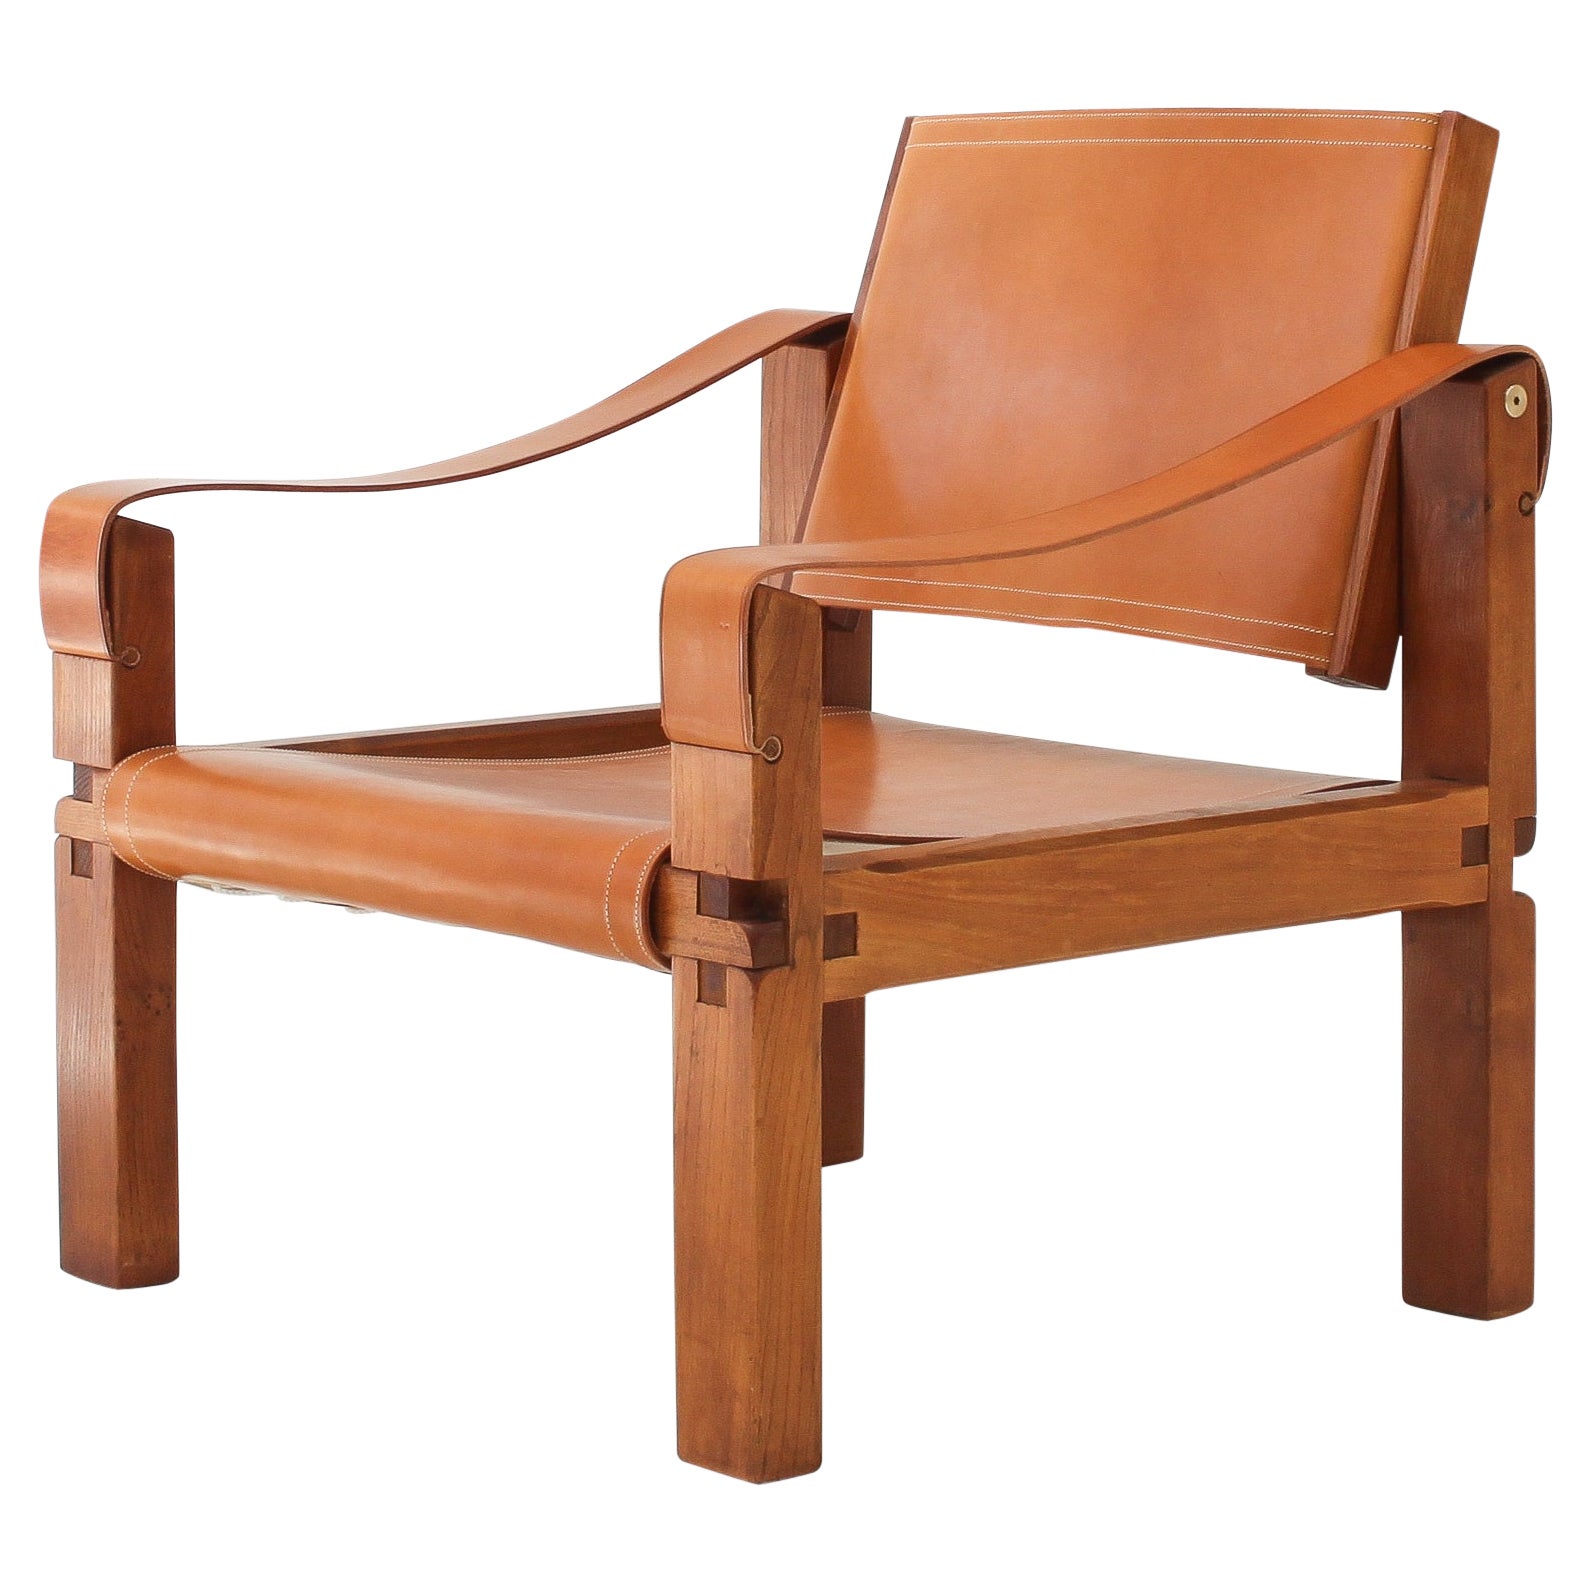 Pierre Chapo Model "S10" Sahara Chair, 1960s, France '2x available'